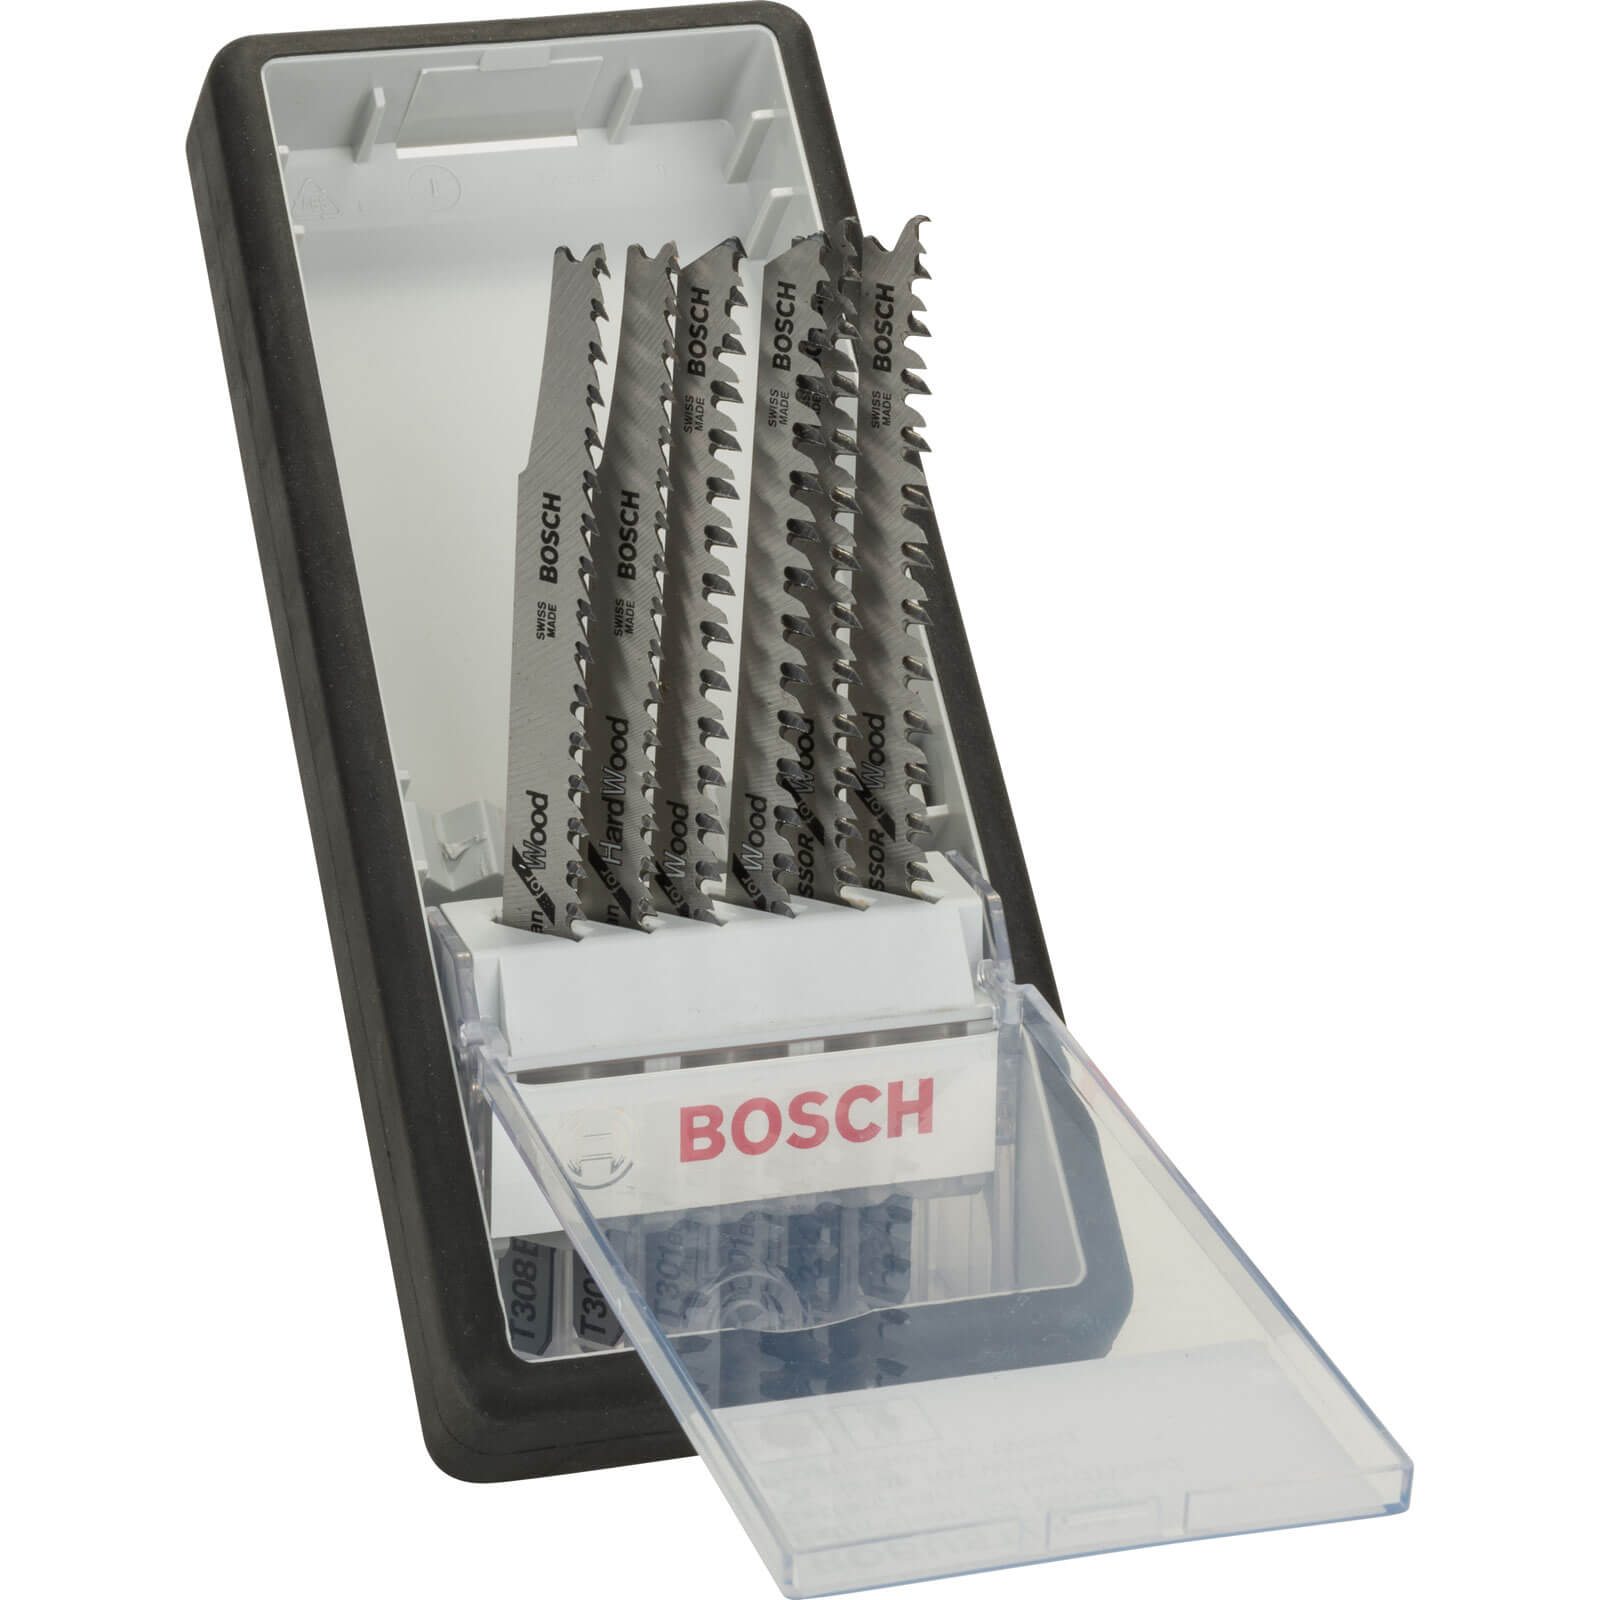 Photo of Bosch 6 Piece Wood Cutting Jigsaw Blade Set